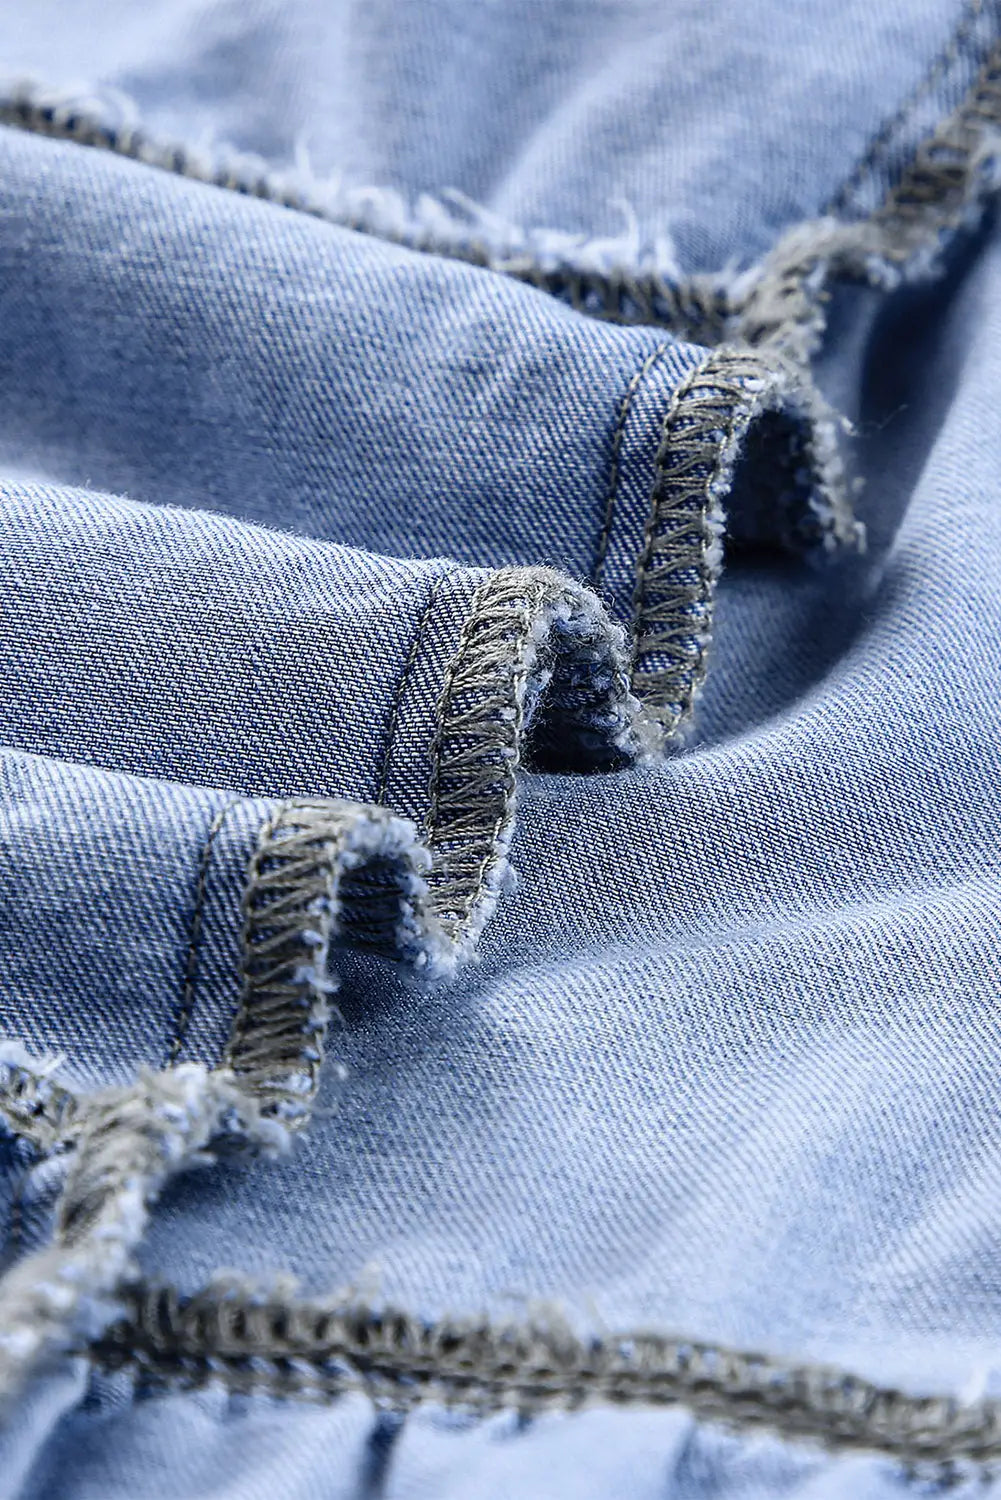 Sky blue flap pockets button up sleeveless denim dress - xl / 85% cotton + 15% polyester - mini dresses